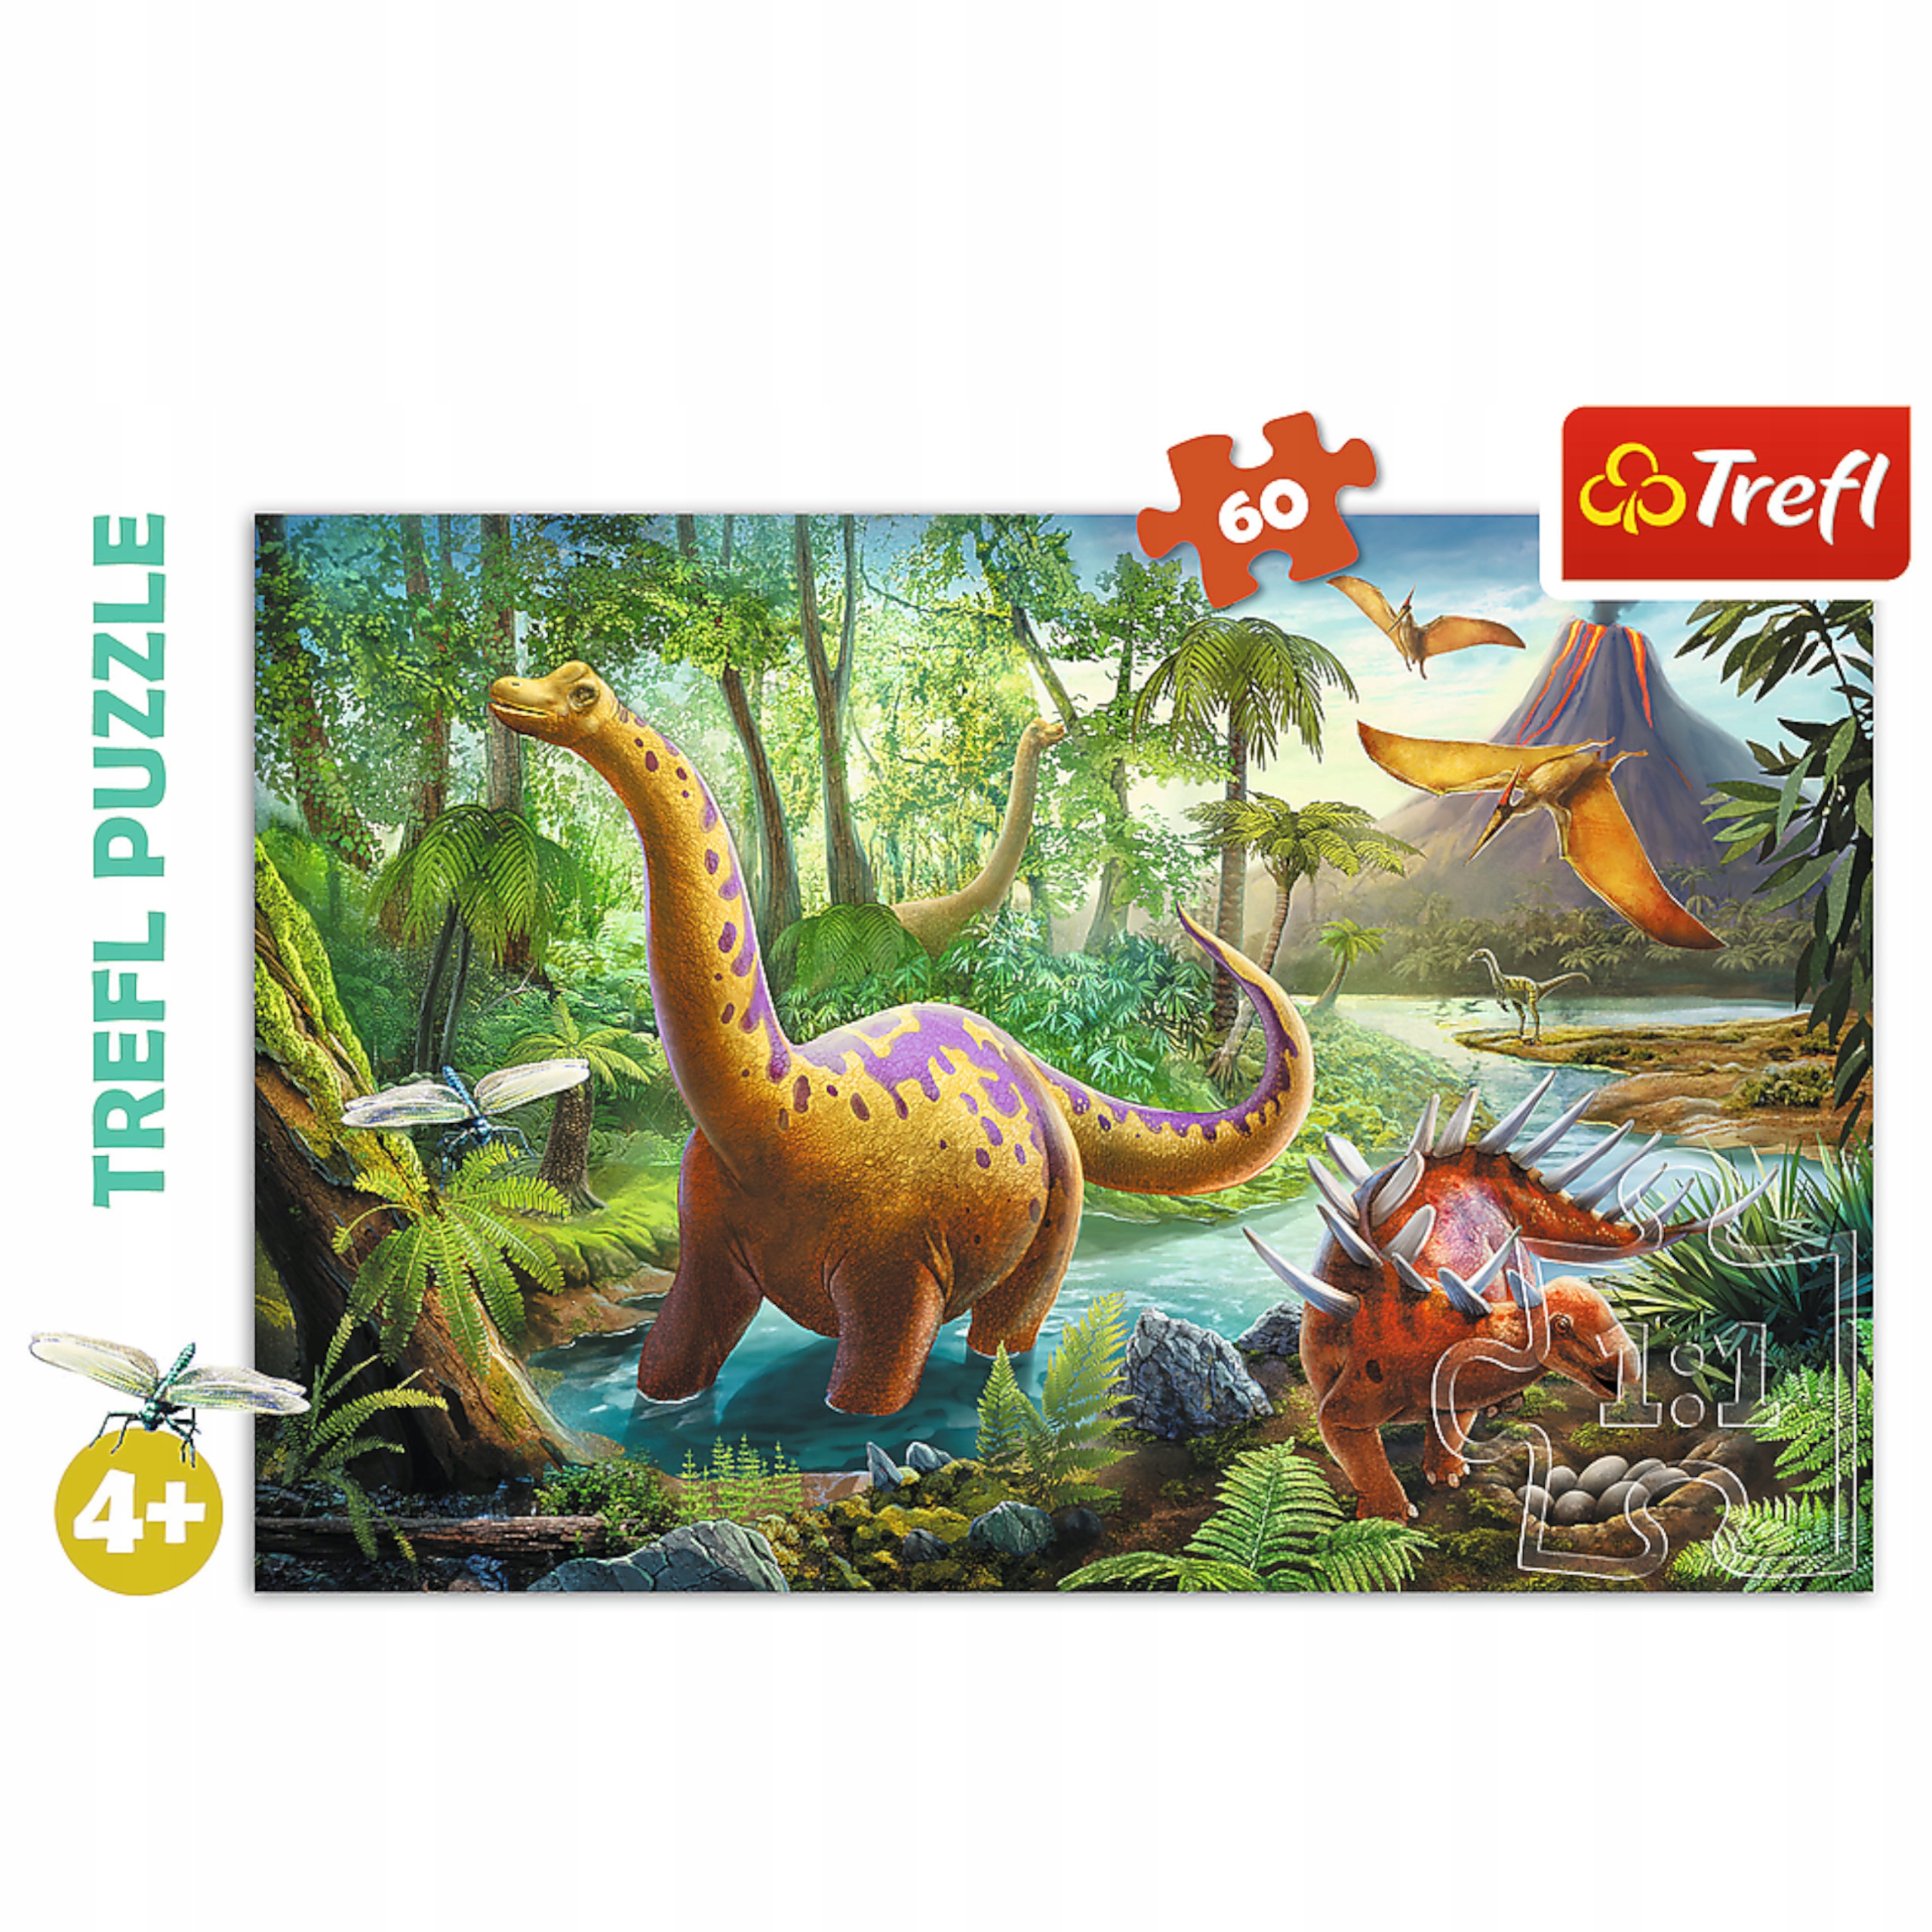 Puzzle Trefl dinozaury 60 el. Wędrówka dinozaurów 17319 Kod producenta 17319